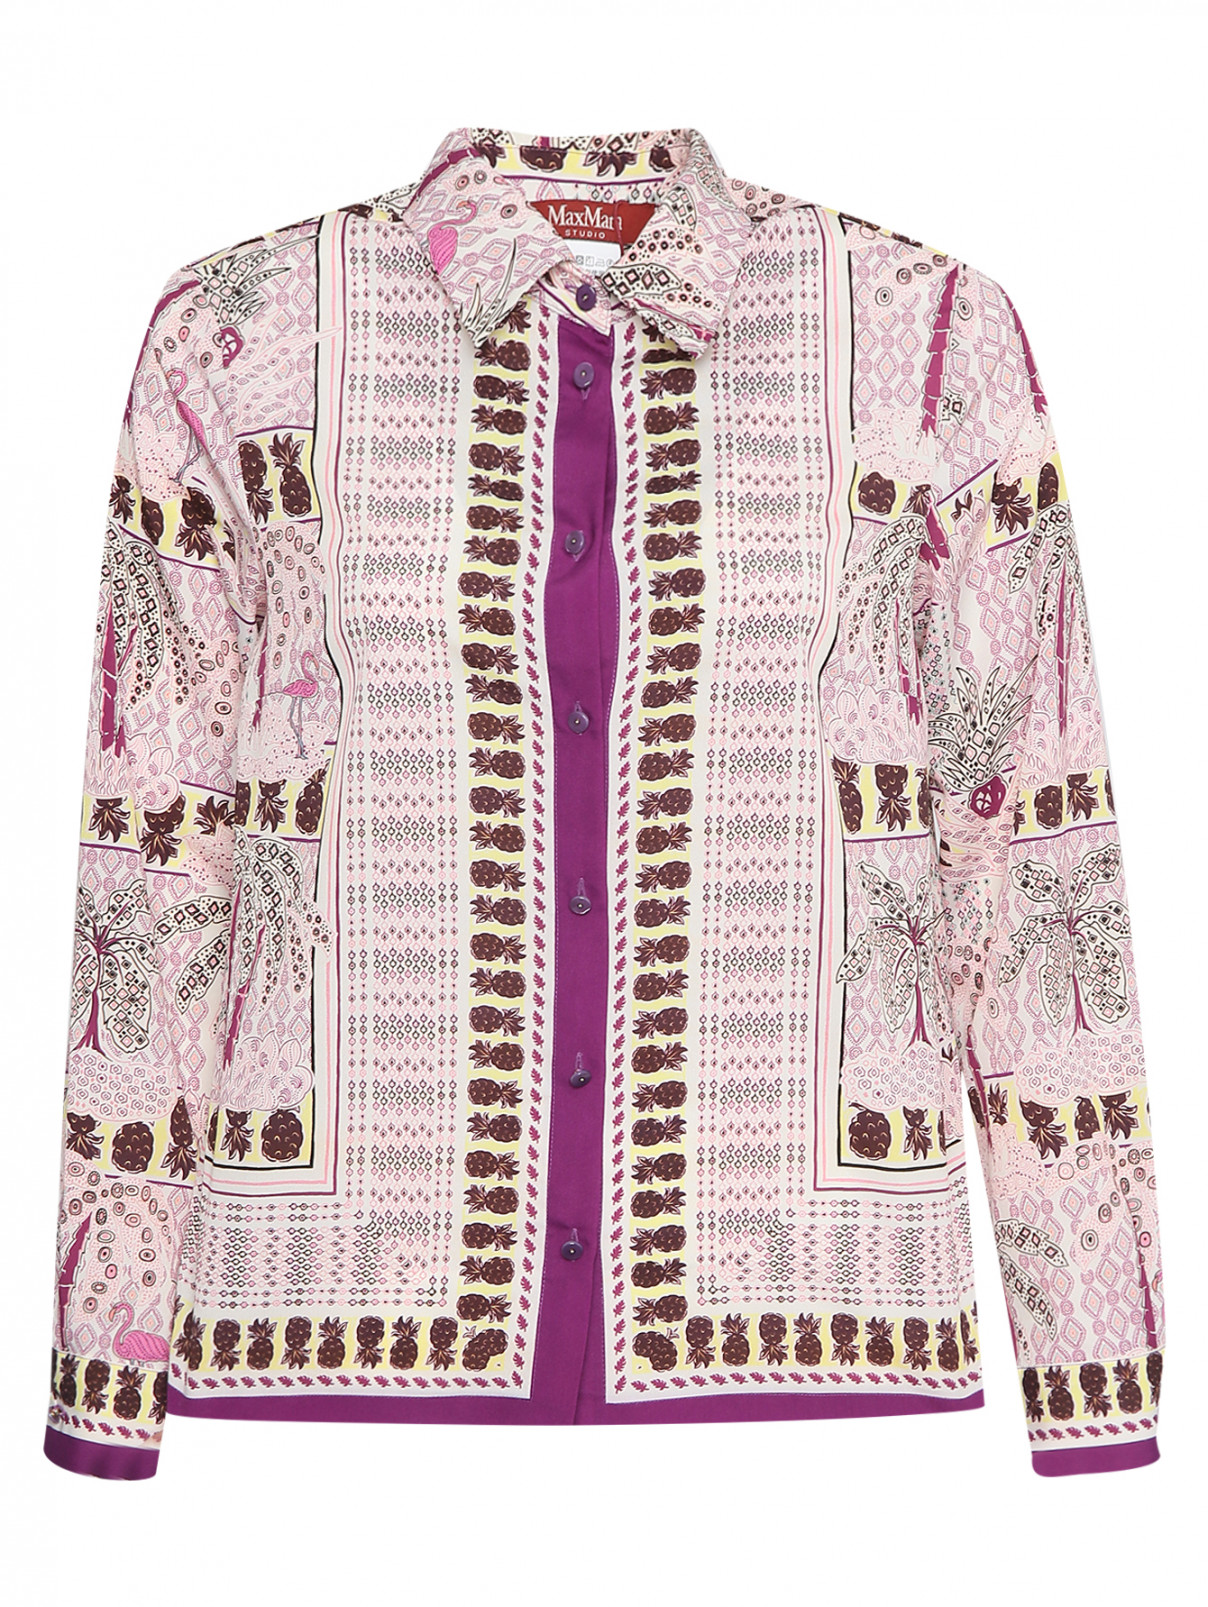 Блуза с узором на пуговицах Max Mara  –  Общий вид  – Цвет:  Мультиколор